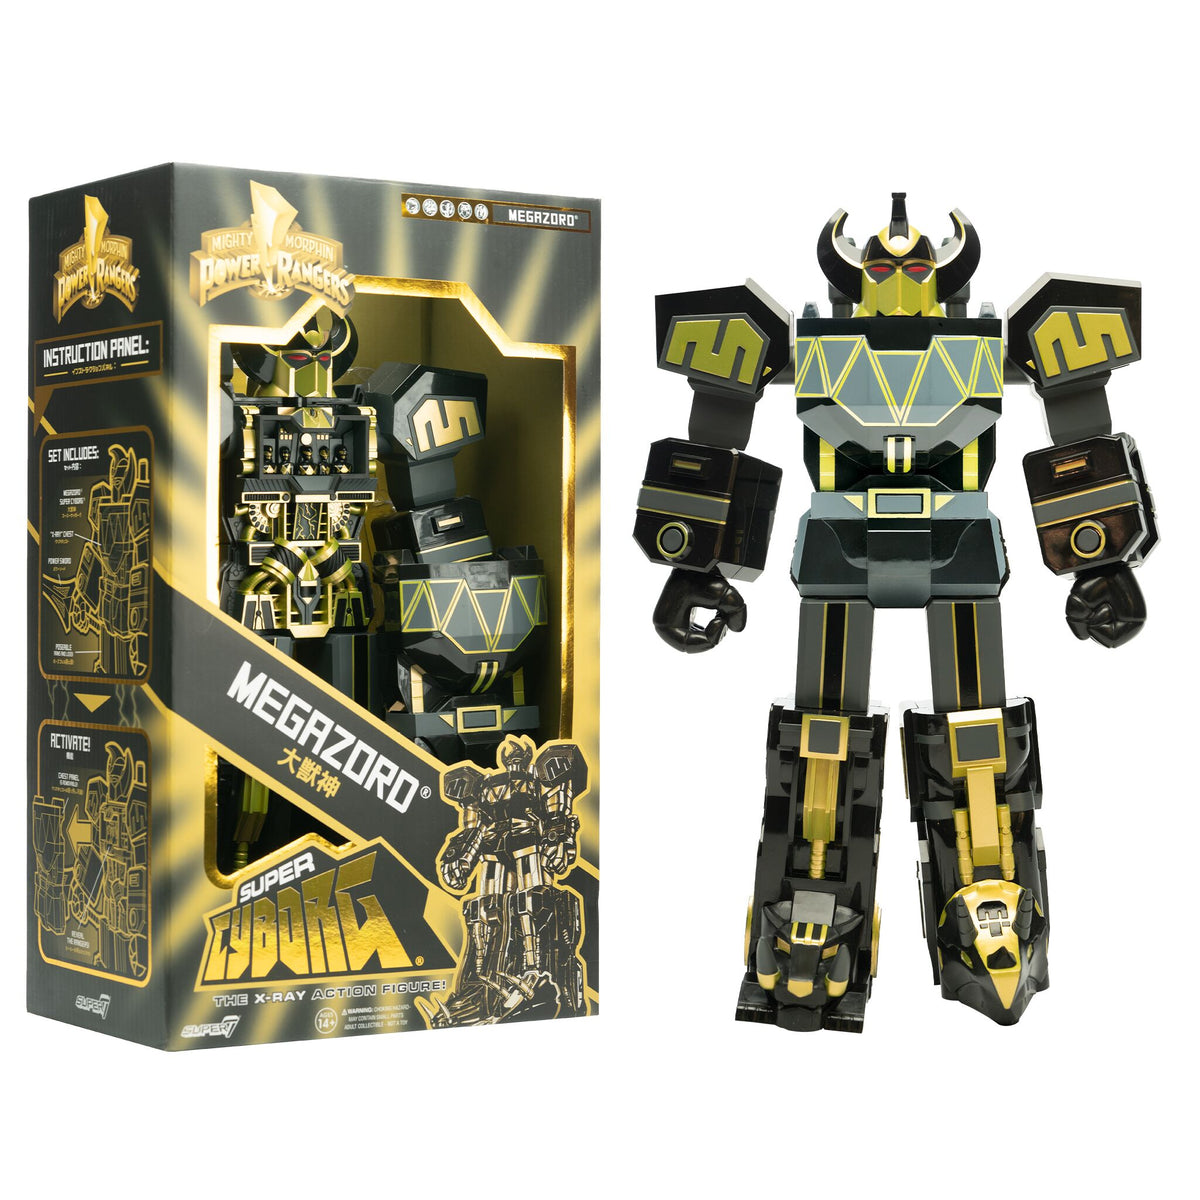 Super Cyborg Megazord - Black & Gold